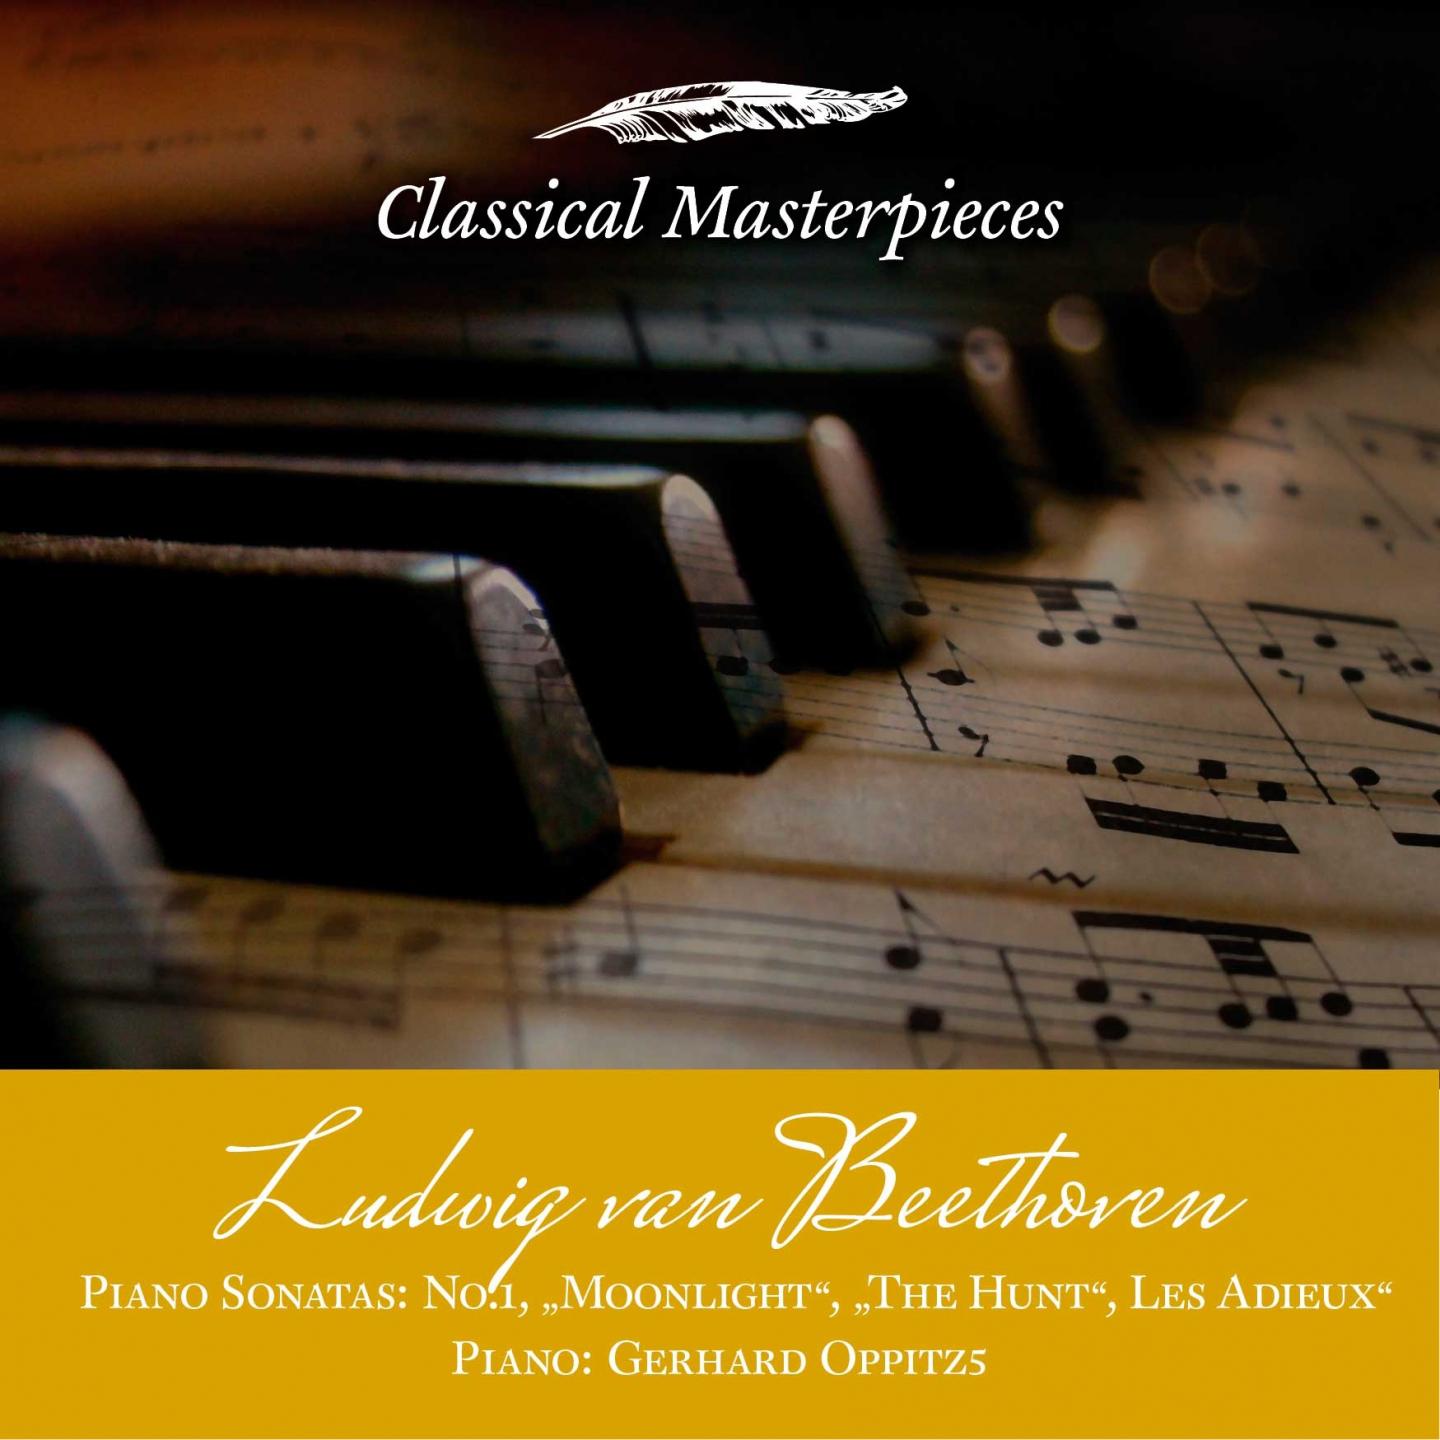 Ludwig van Beethoven Piano Sonatas "Moonlight", "The Hunt", Les Adieux"